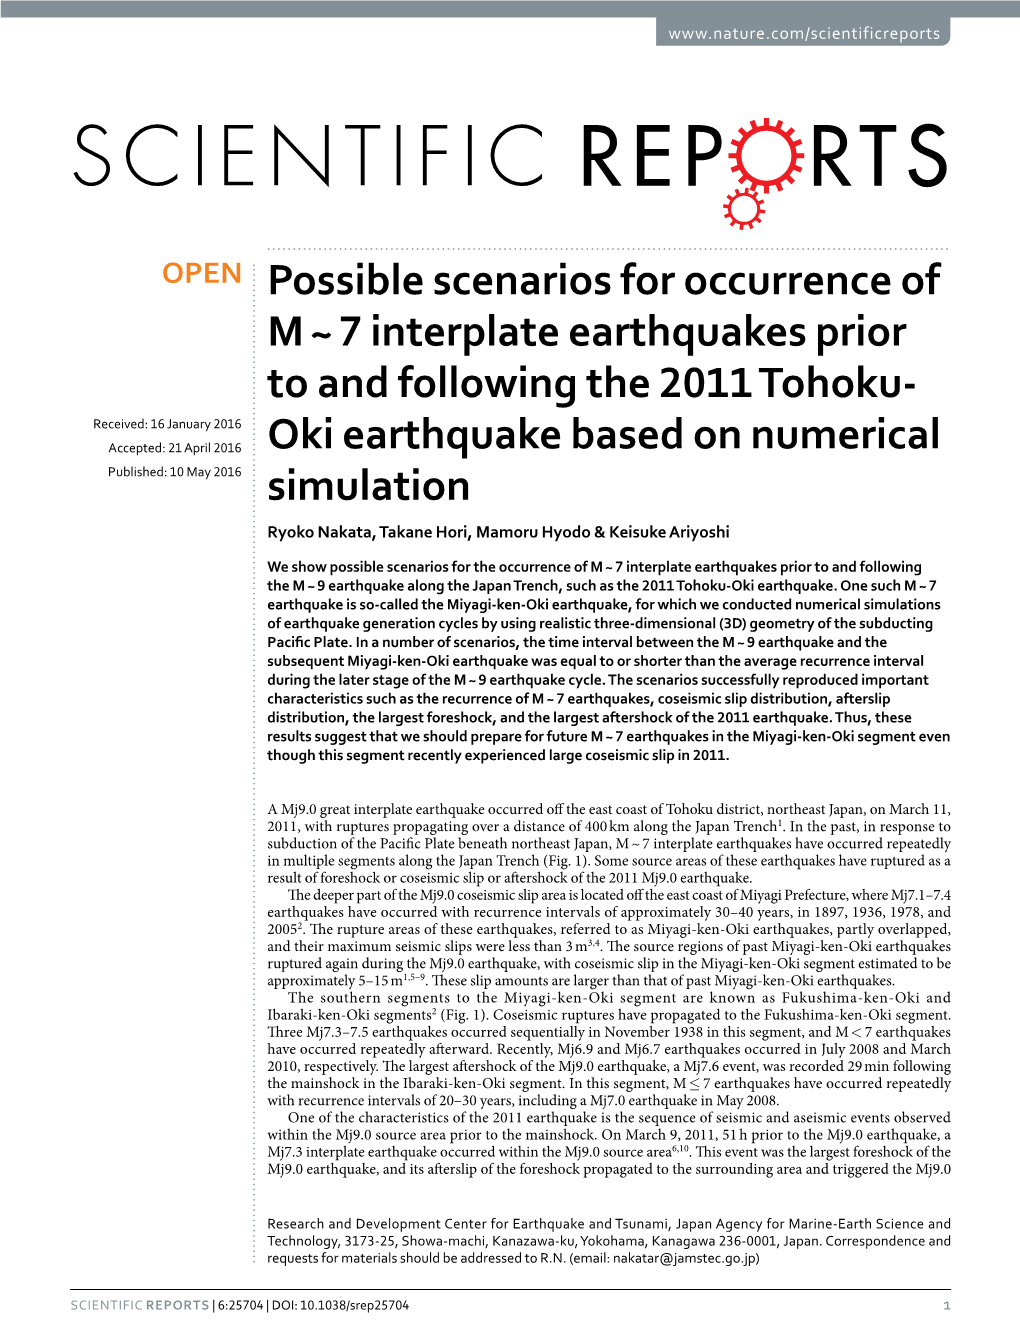 7 Interplate Earthquakes Prior to and Following the 2011 Tohoku-Oki Earthquake Based on Numerical Simulation